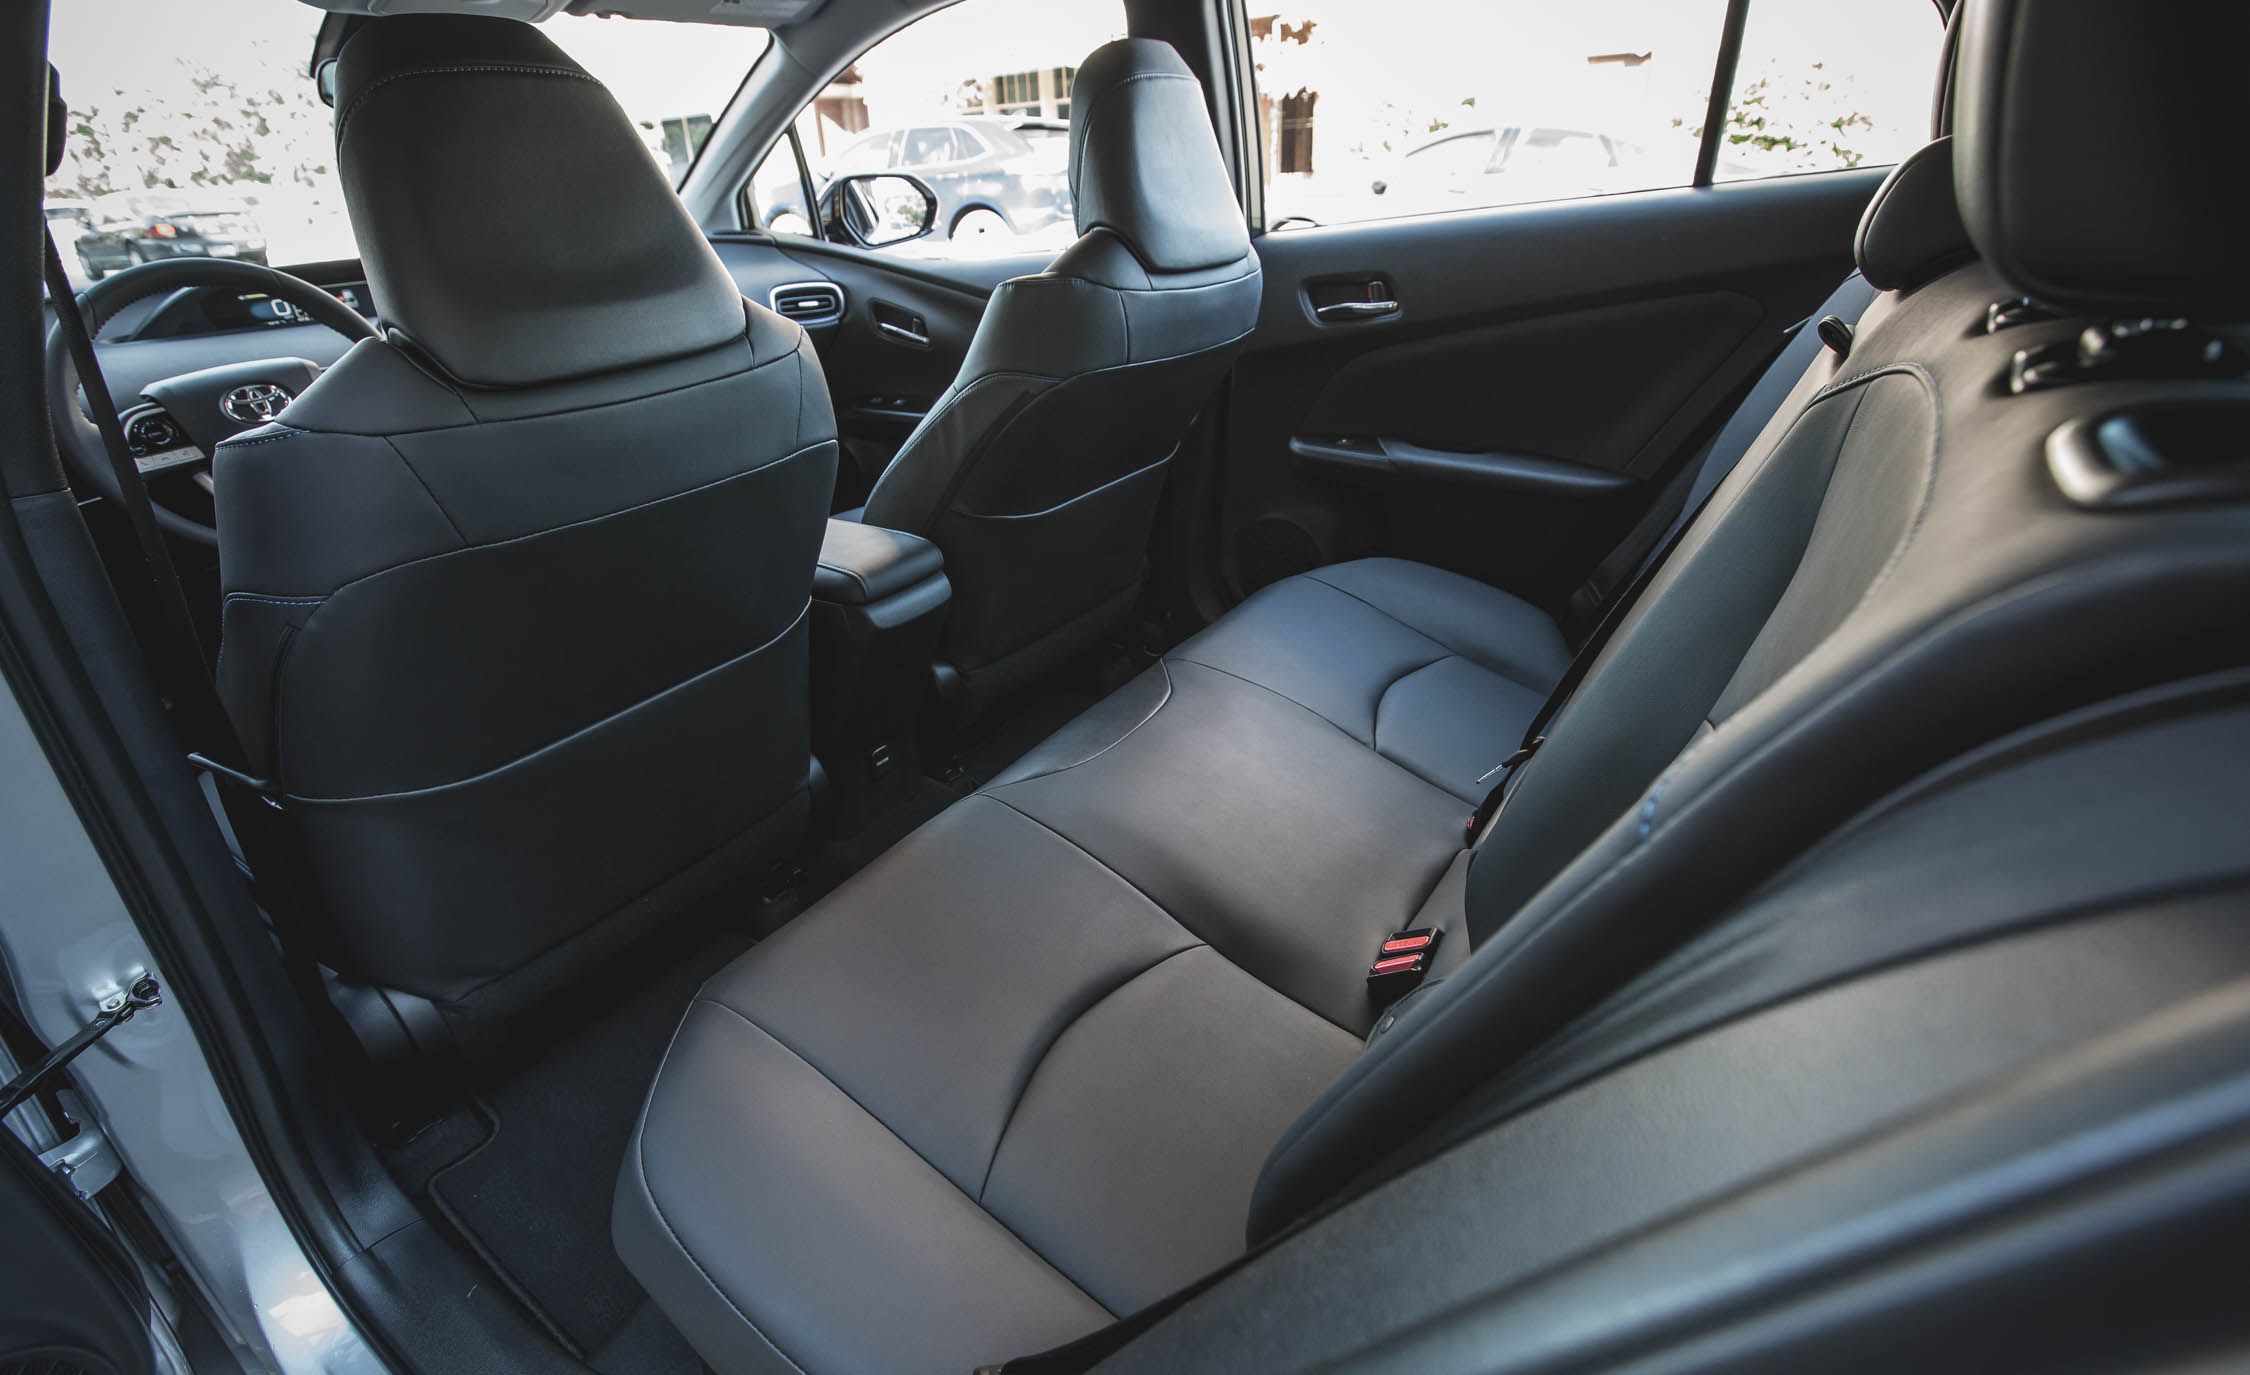 2017 Toyota Prius Interior Seats Rear Passengers (View 18 of 64)